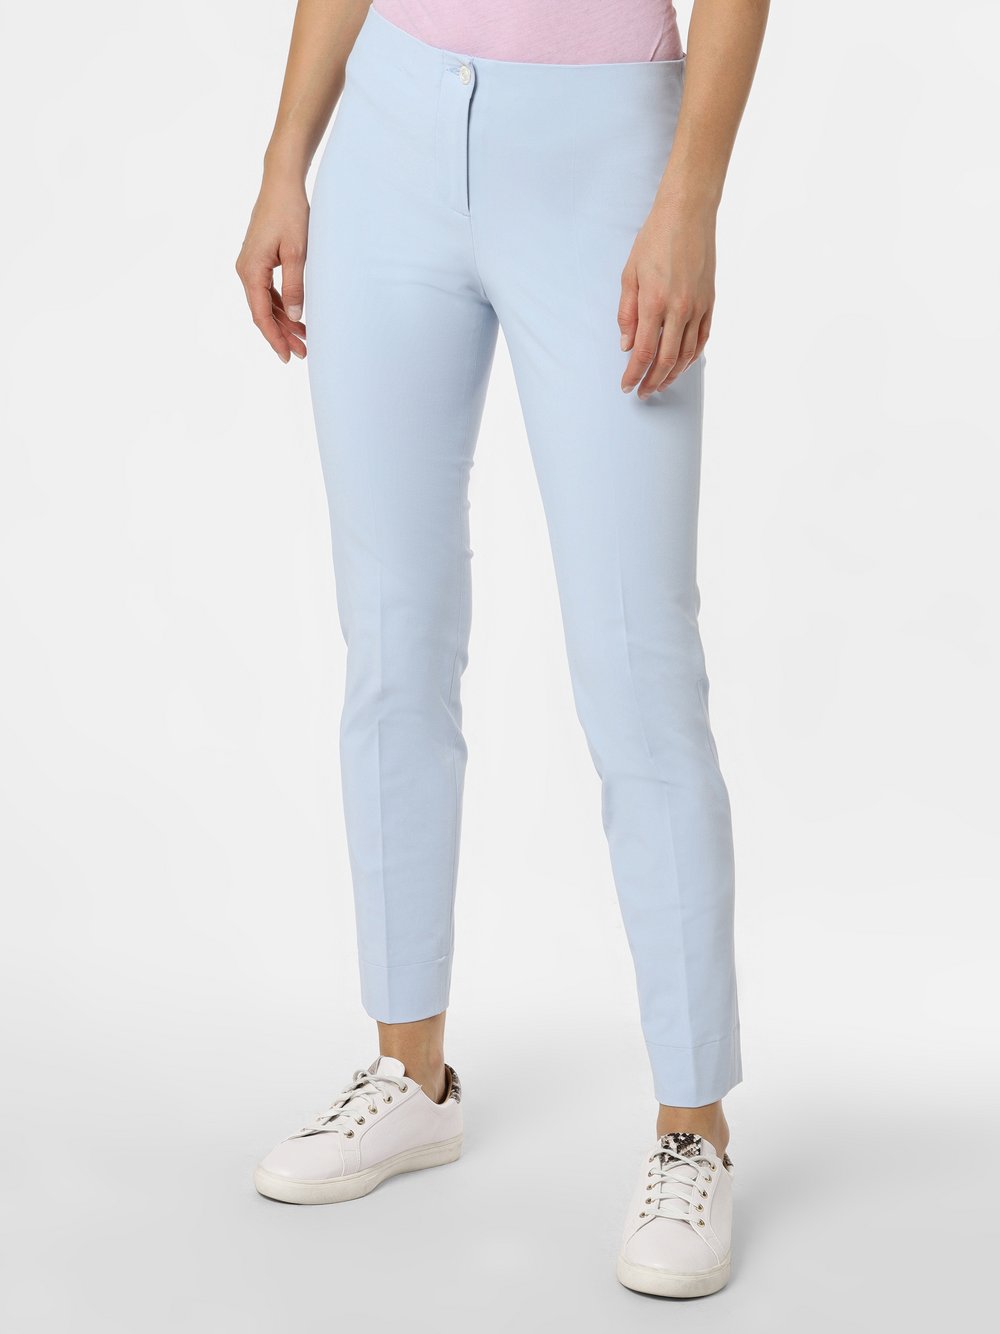 Cambio - Spodnie damskie – Ros, niebieski